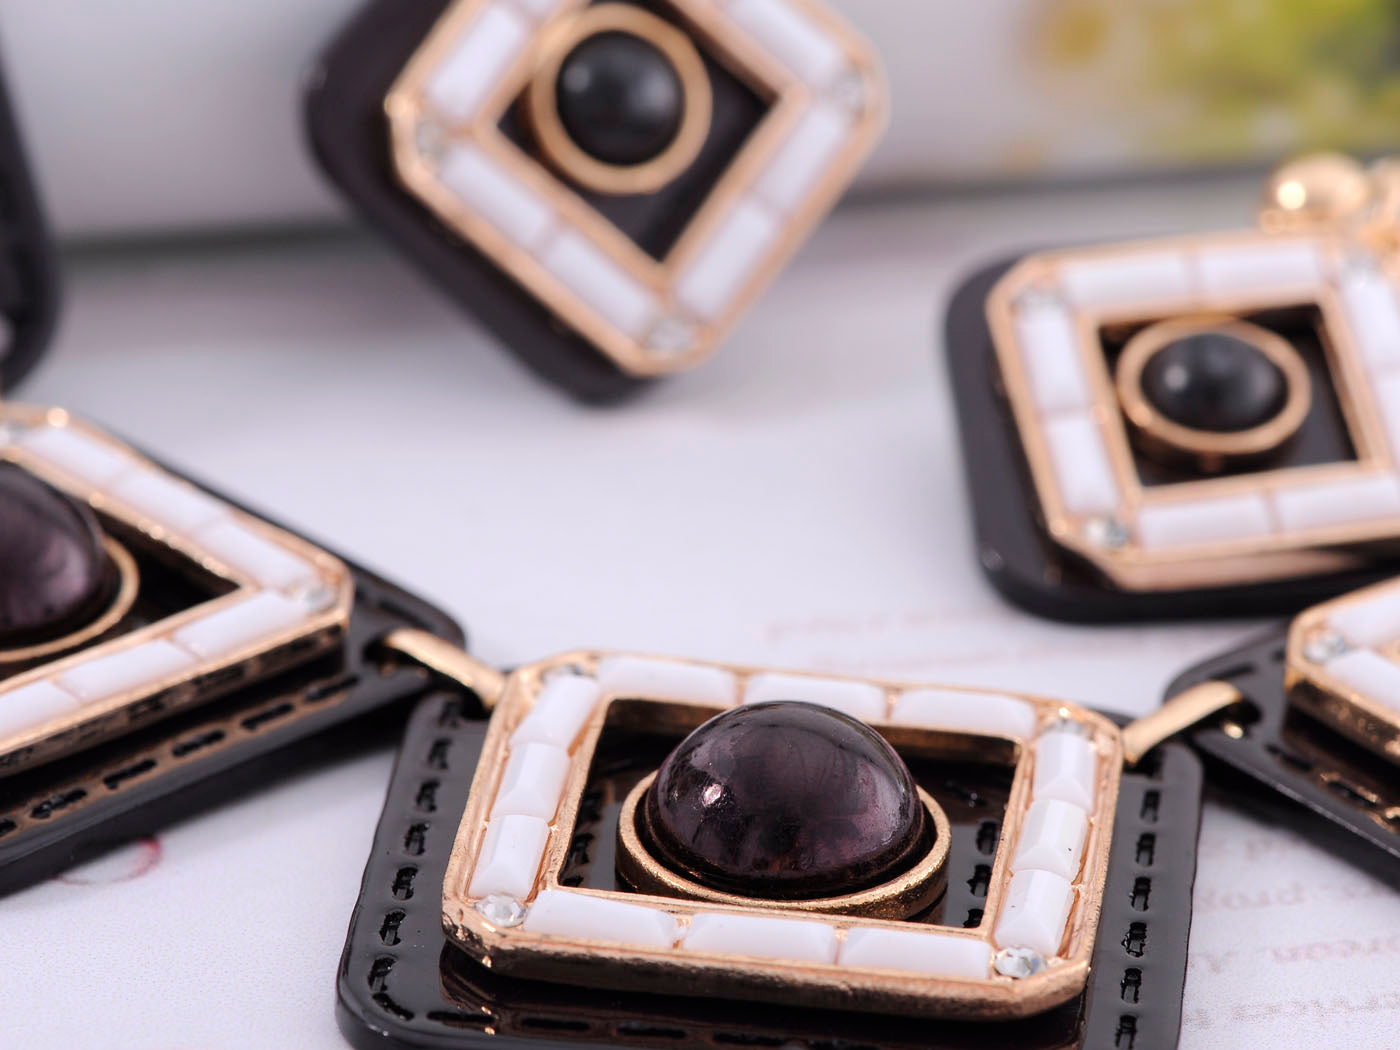 Retro Leather Square Black Gem Necklace Earring Set